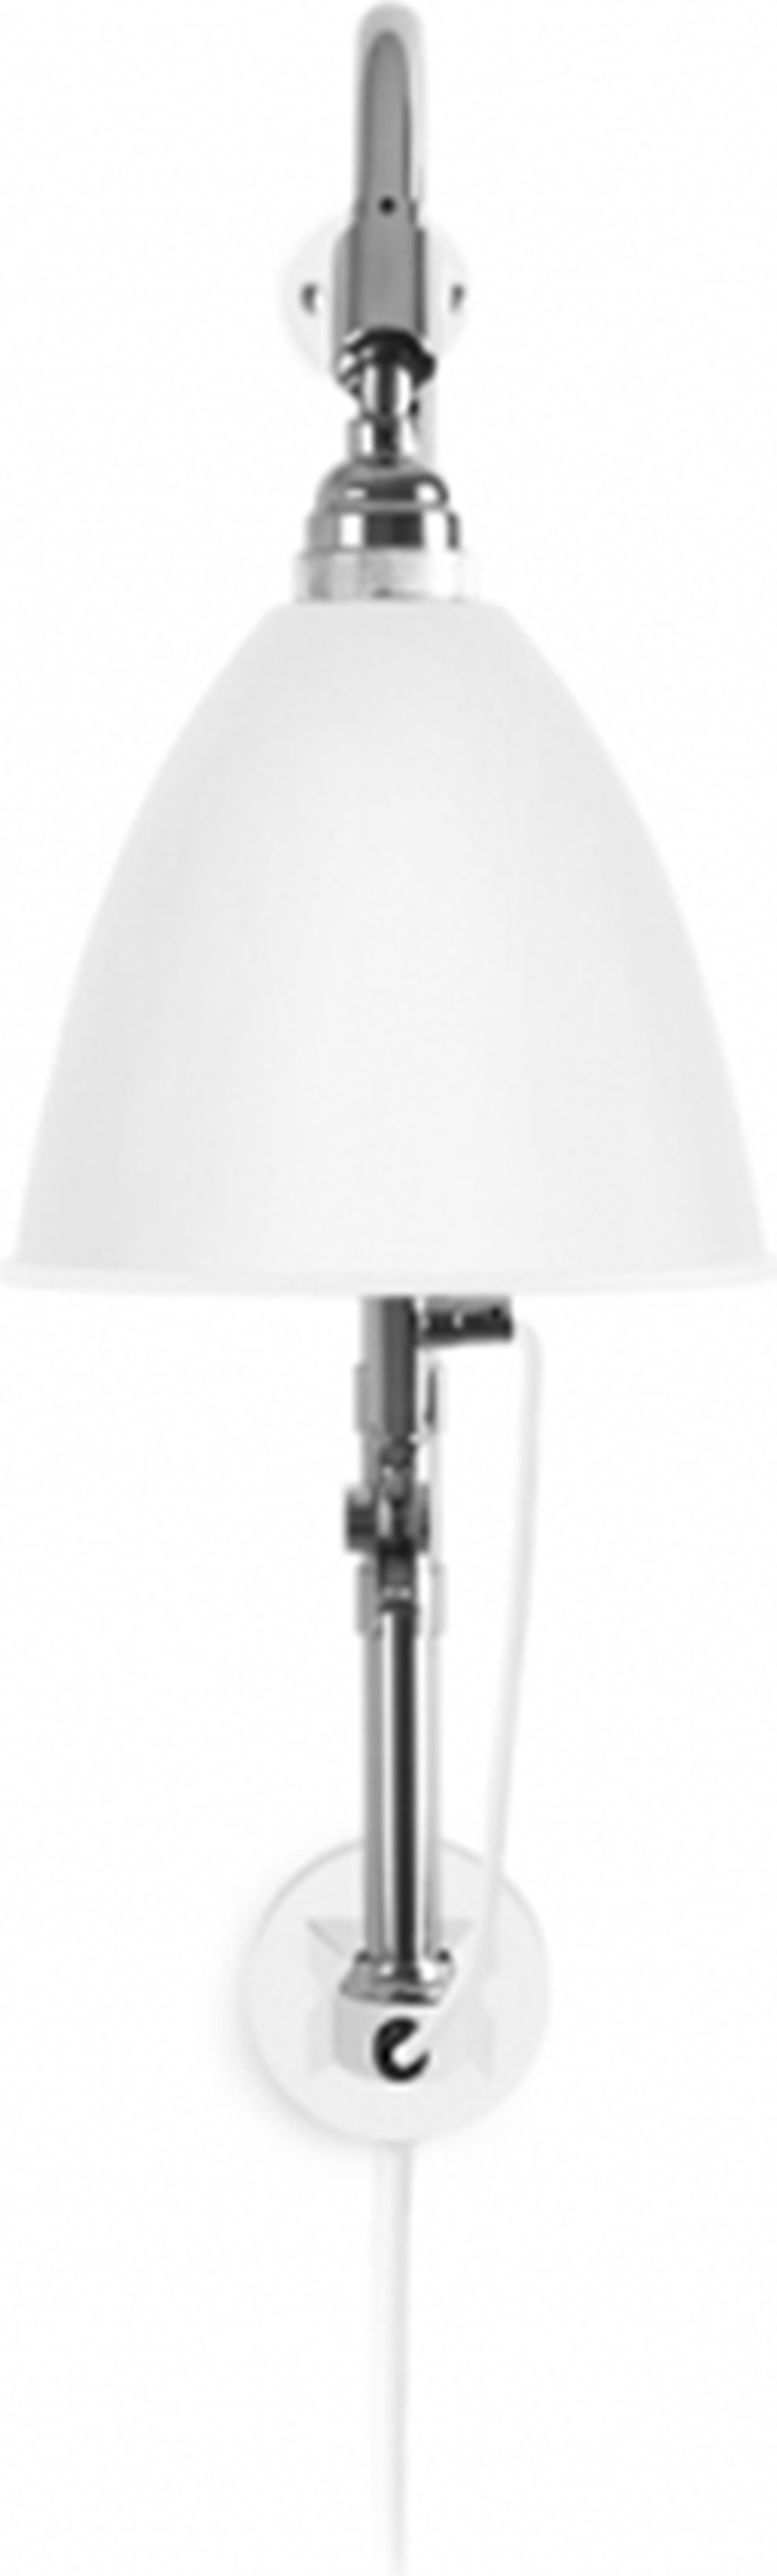 Bestlite Style Vegglampe - BL5 White image.